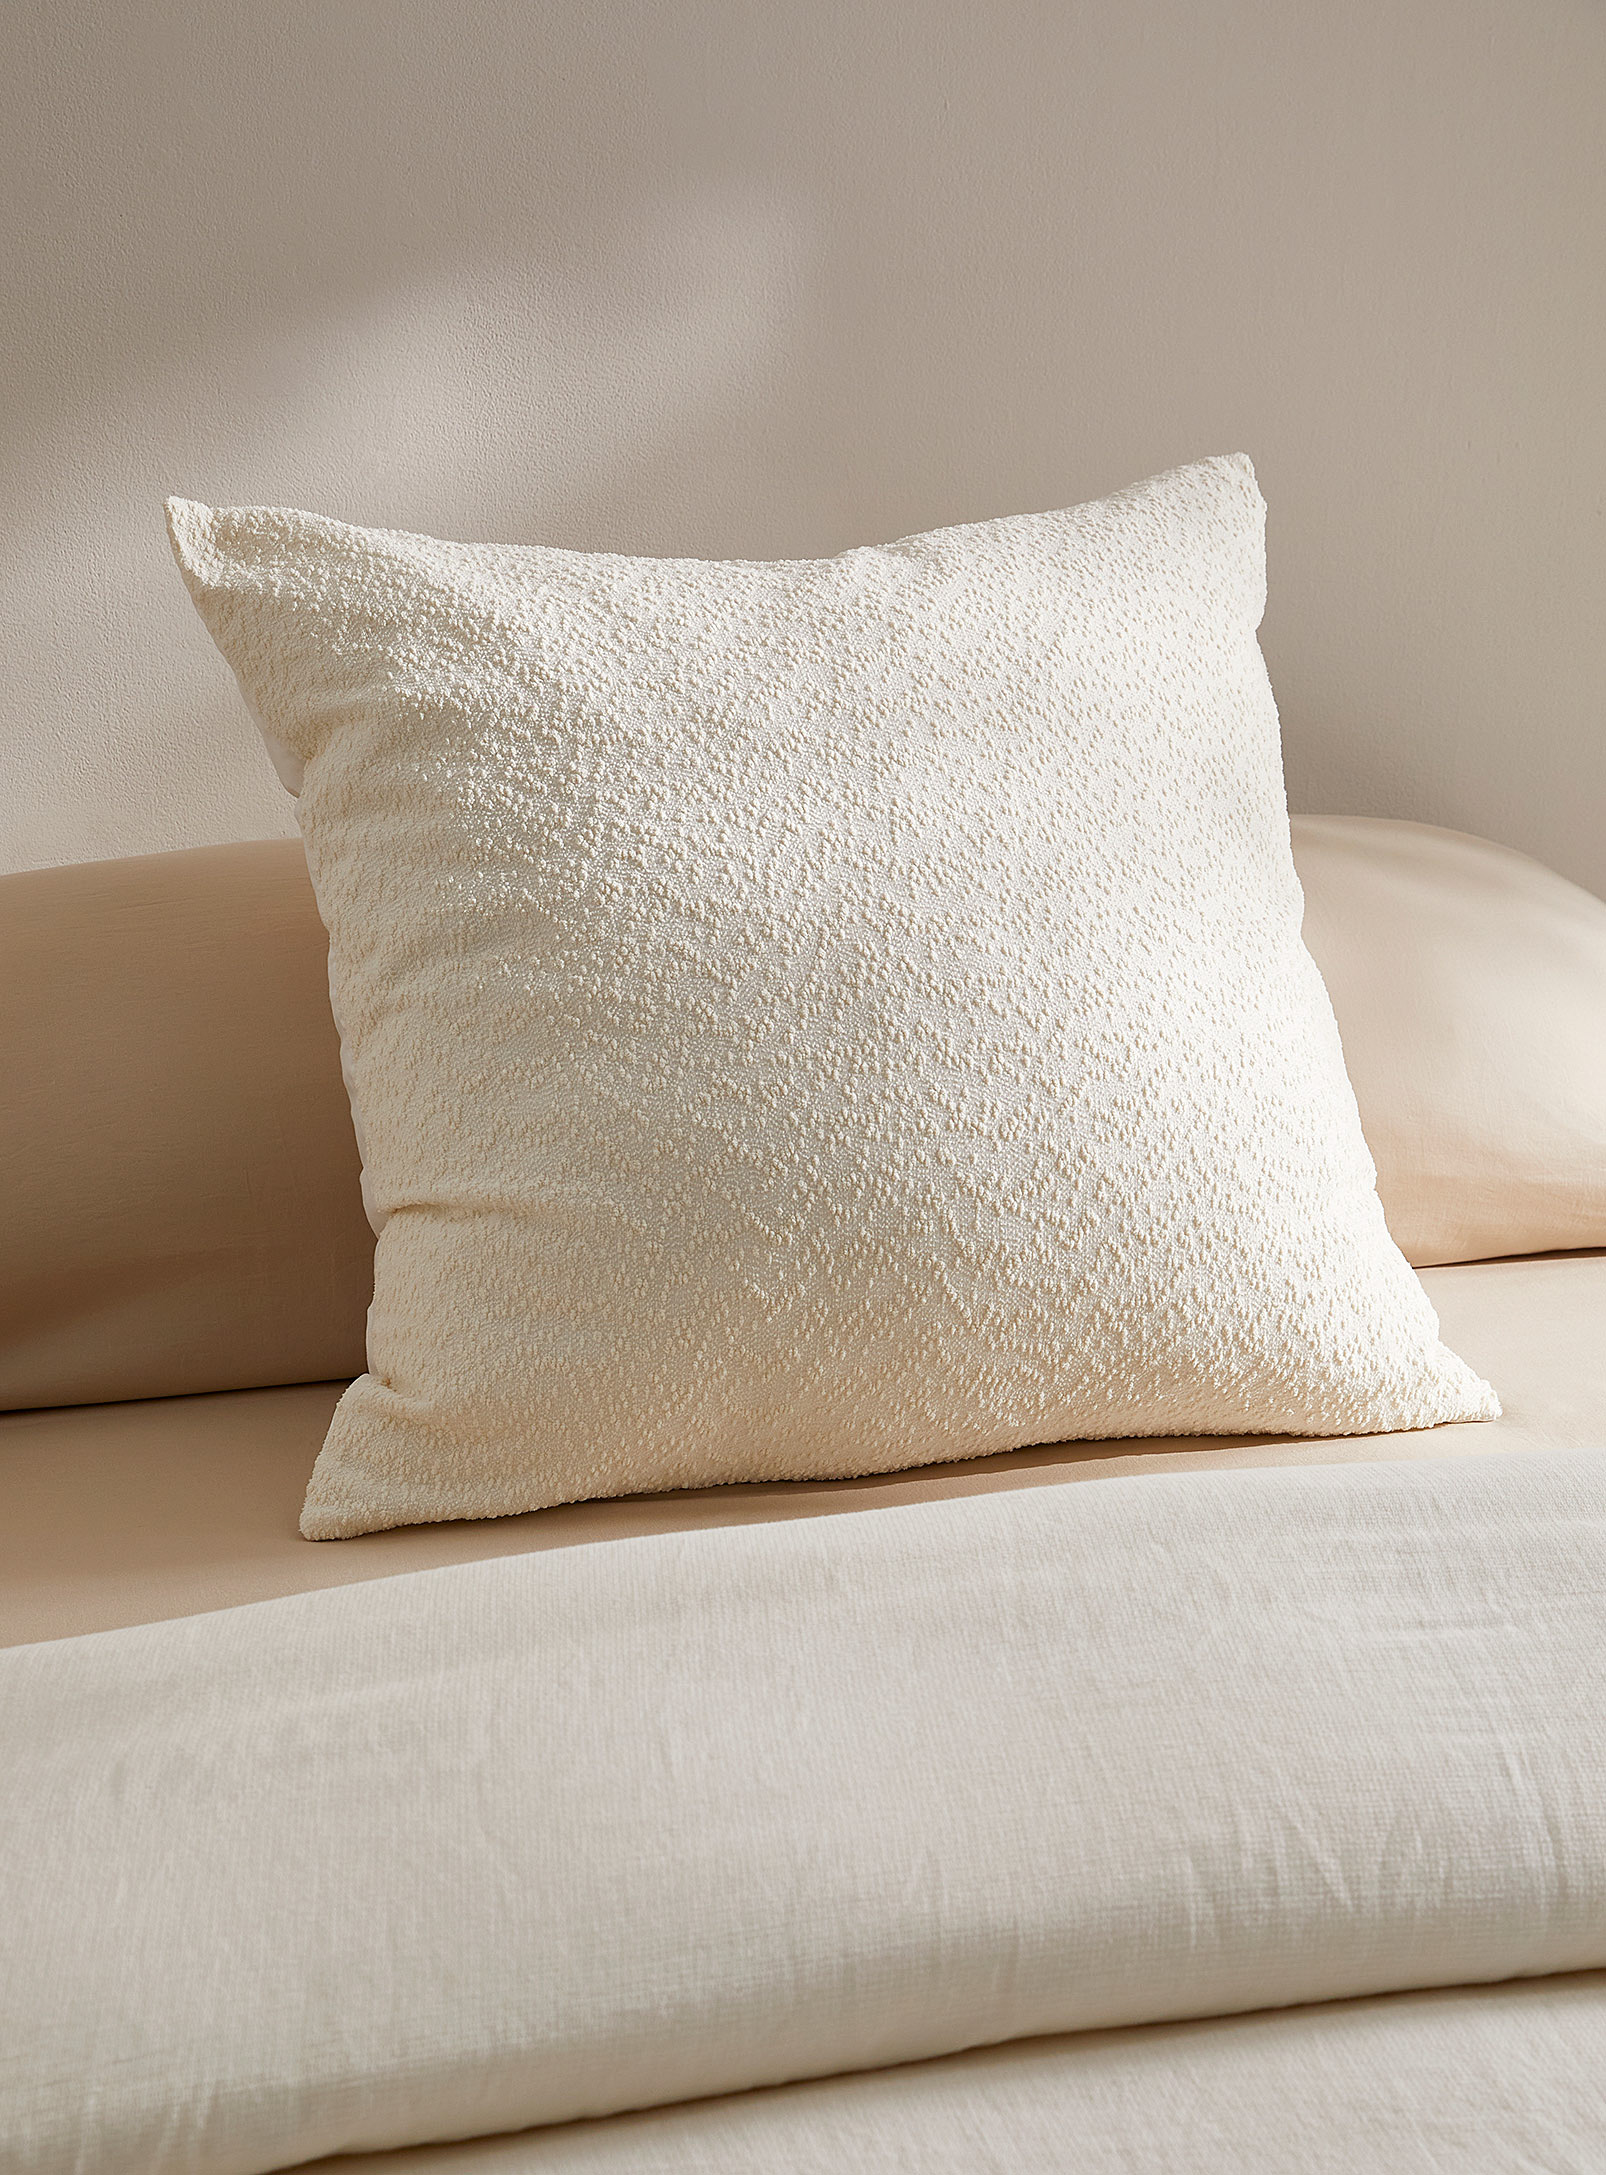 Simons Maison Thin Bouclé Euro Pillow Sham 66 X 66 Cm In Ivory White